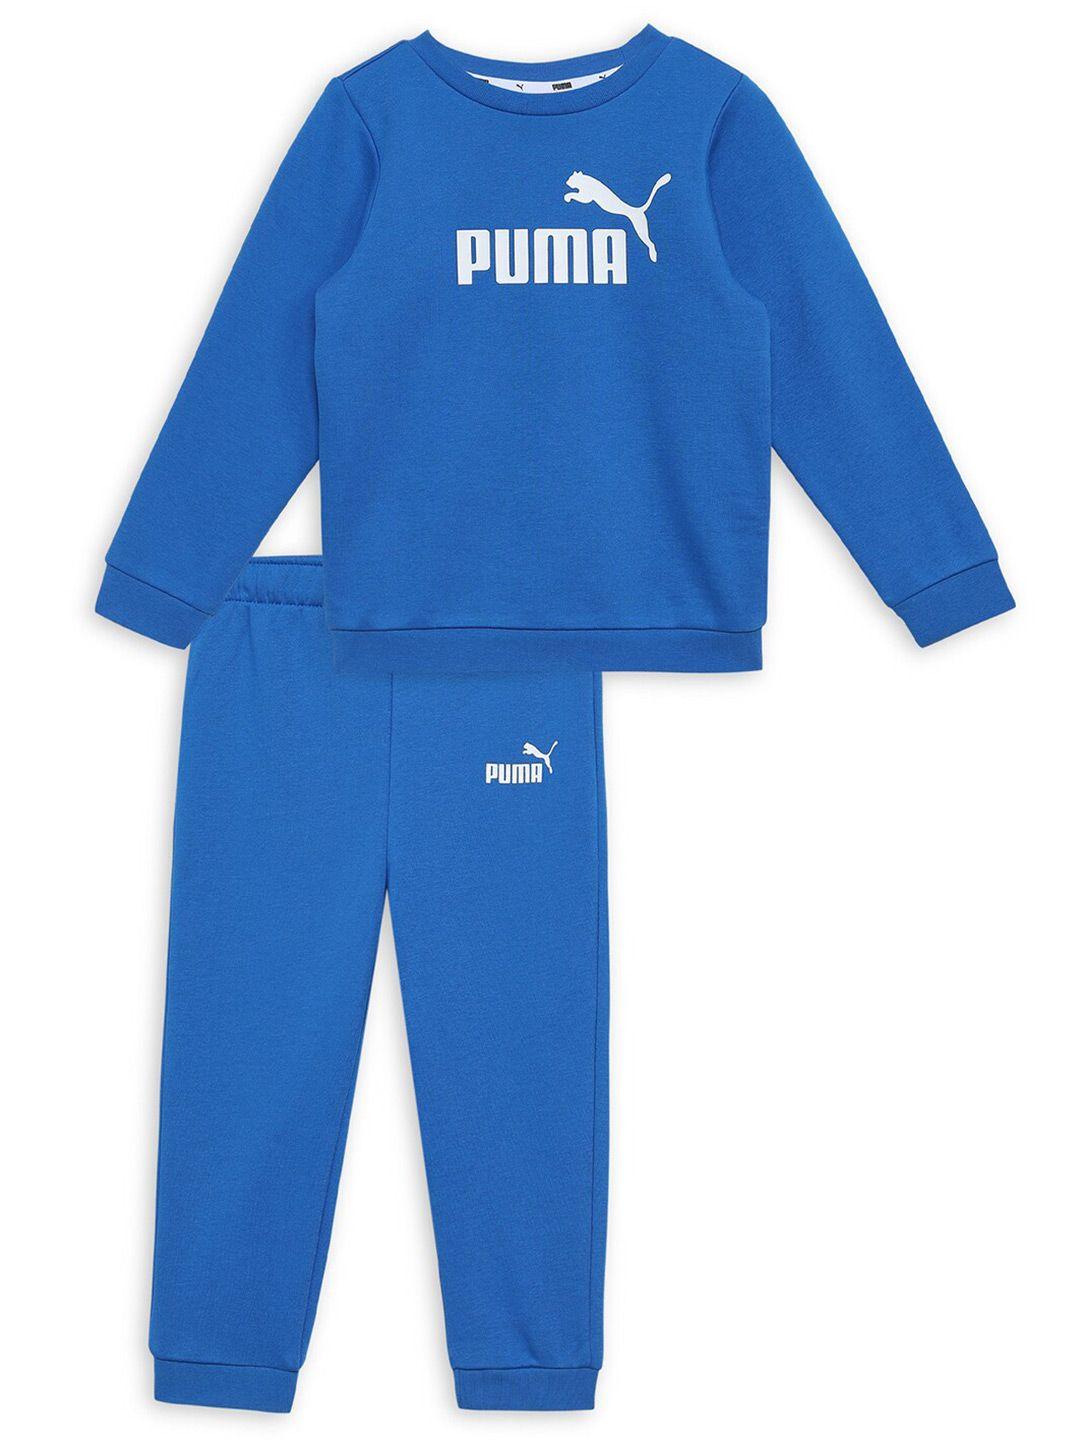 puma-kids-printed-t-shirt-with-joggers-clothing-set